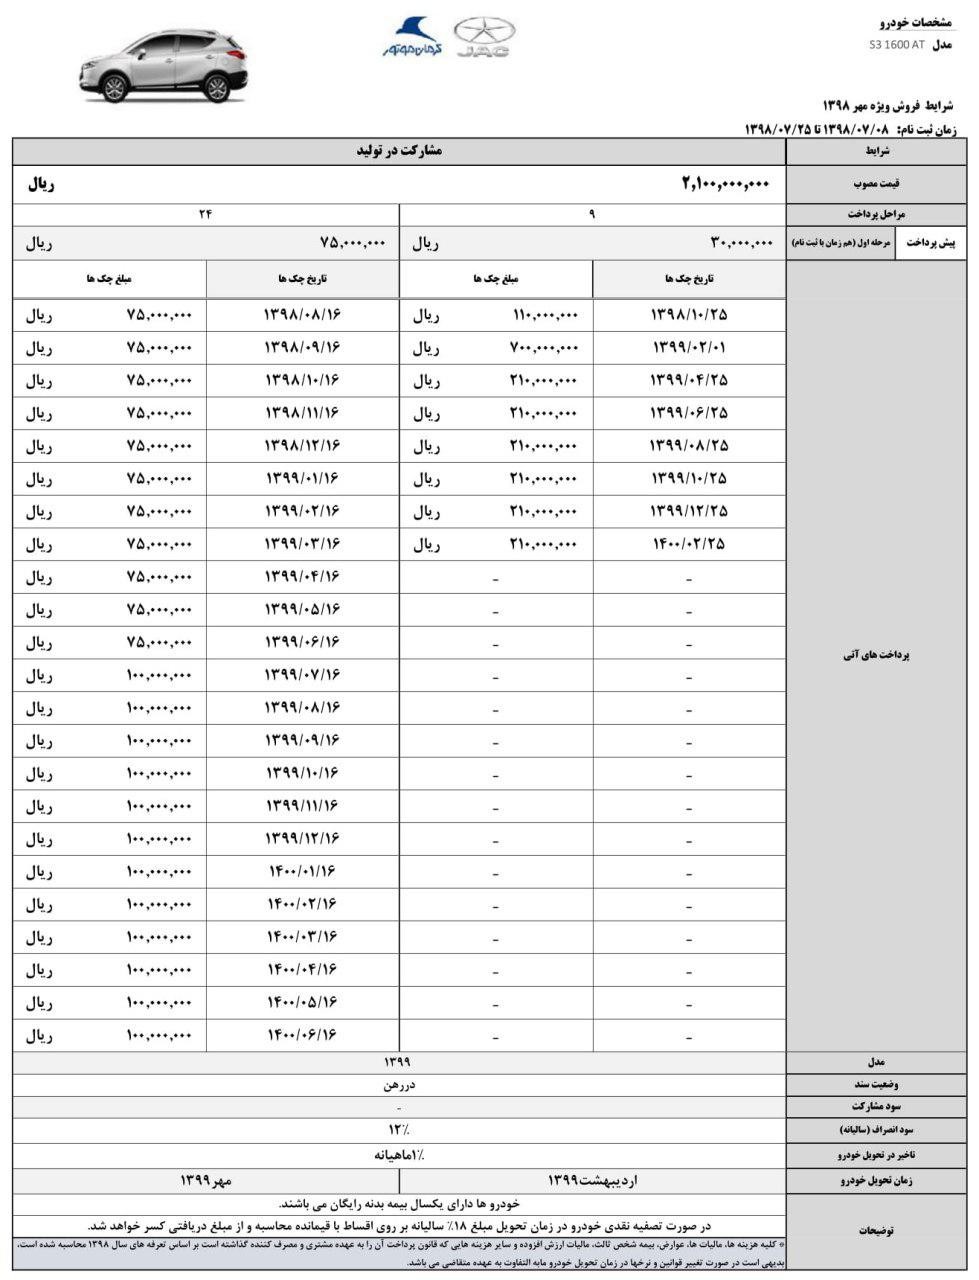 جدول طرح جدید فروش نقد و اقساطی جک S3 - مهر 98.jpg